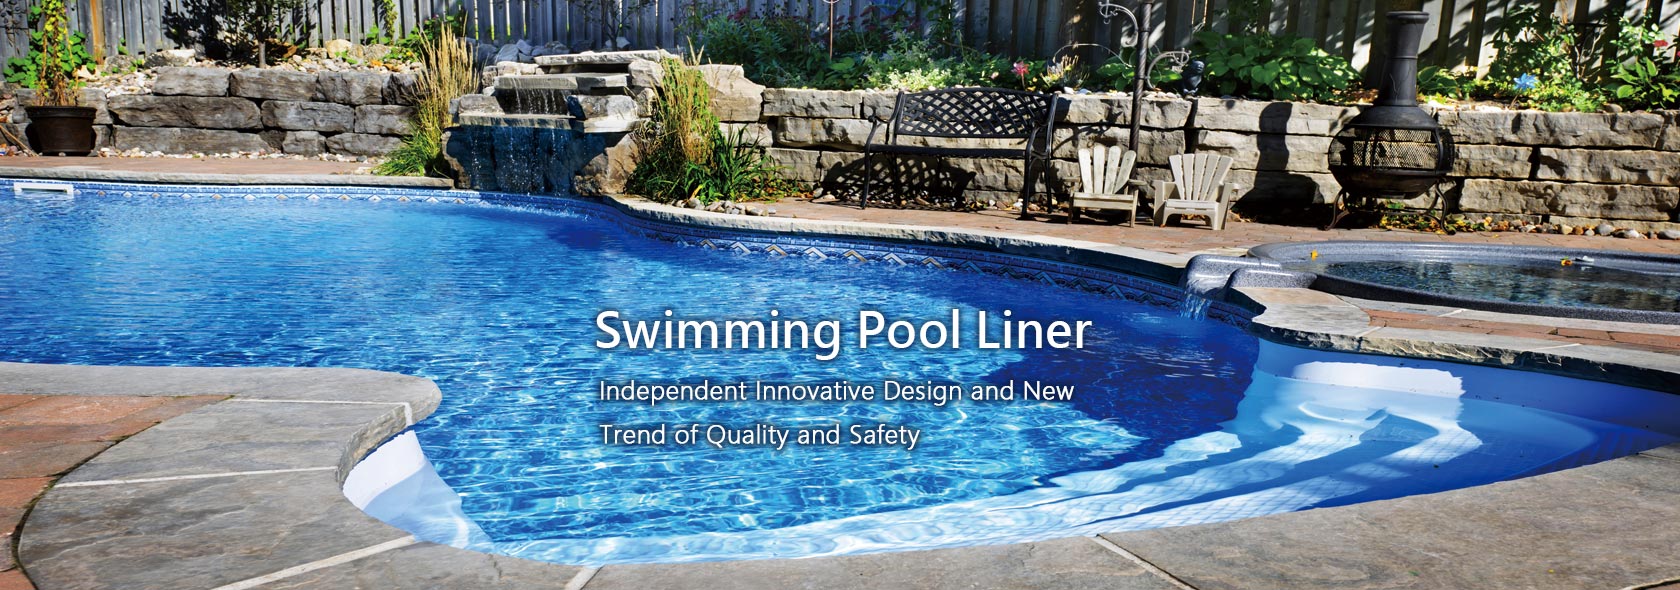 NAN YA swimming pool liner, Use high-quality PVC material